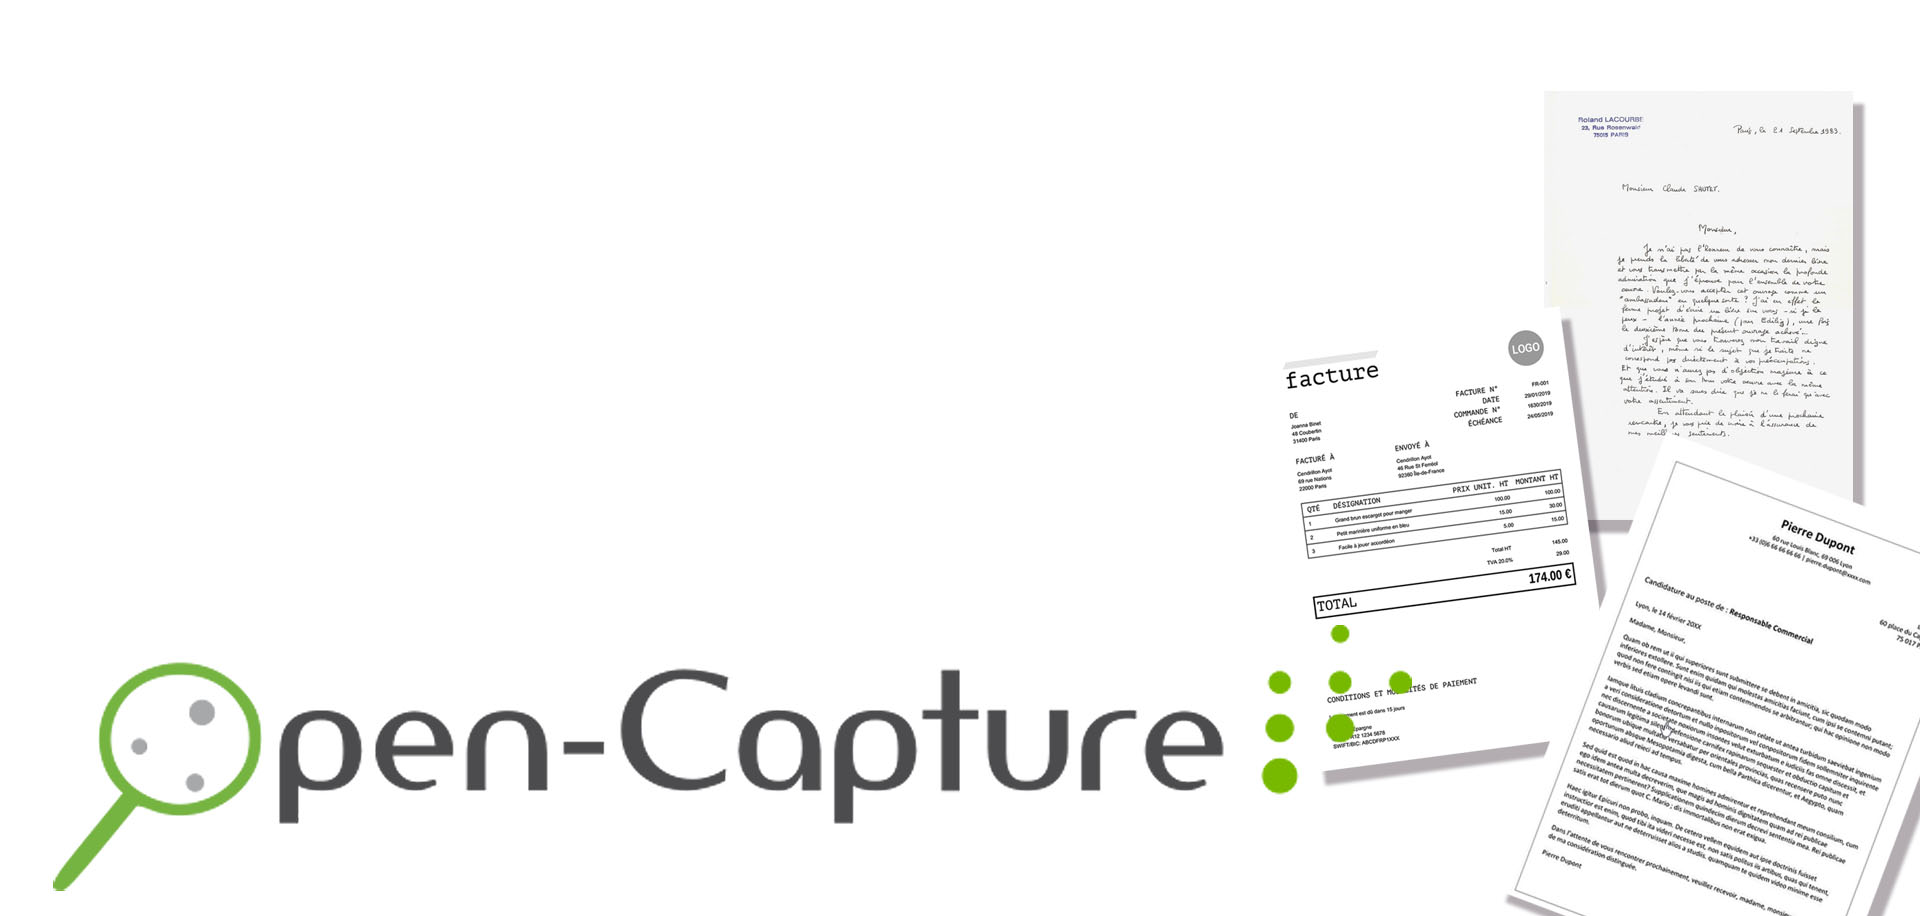 Open-capture - LAD opensource